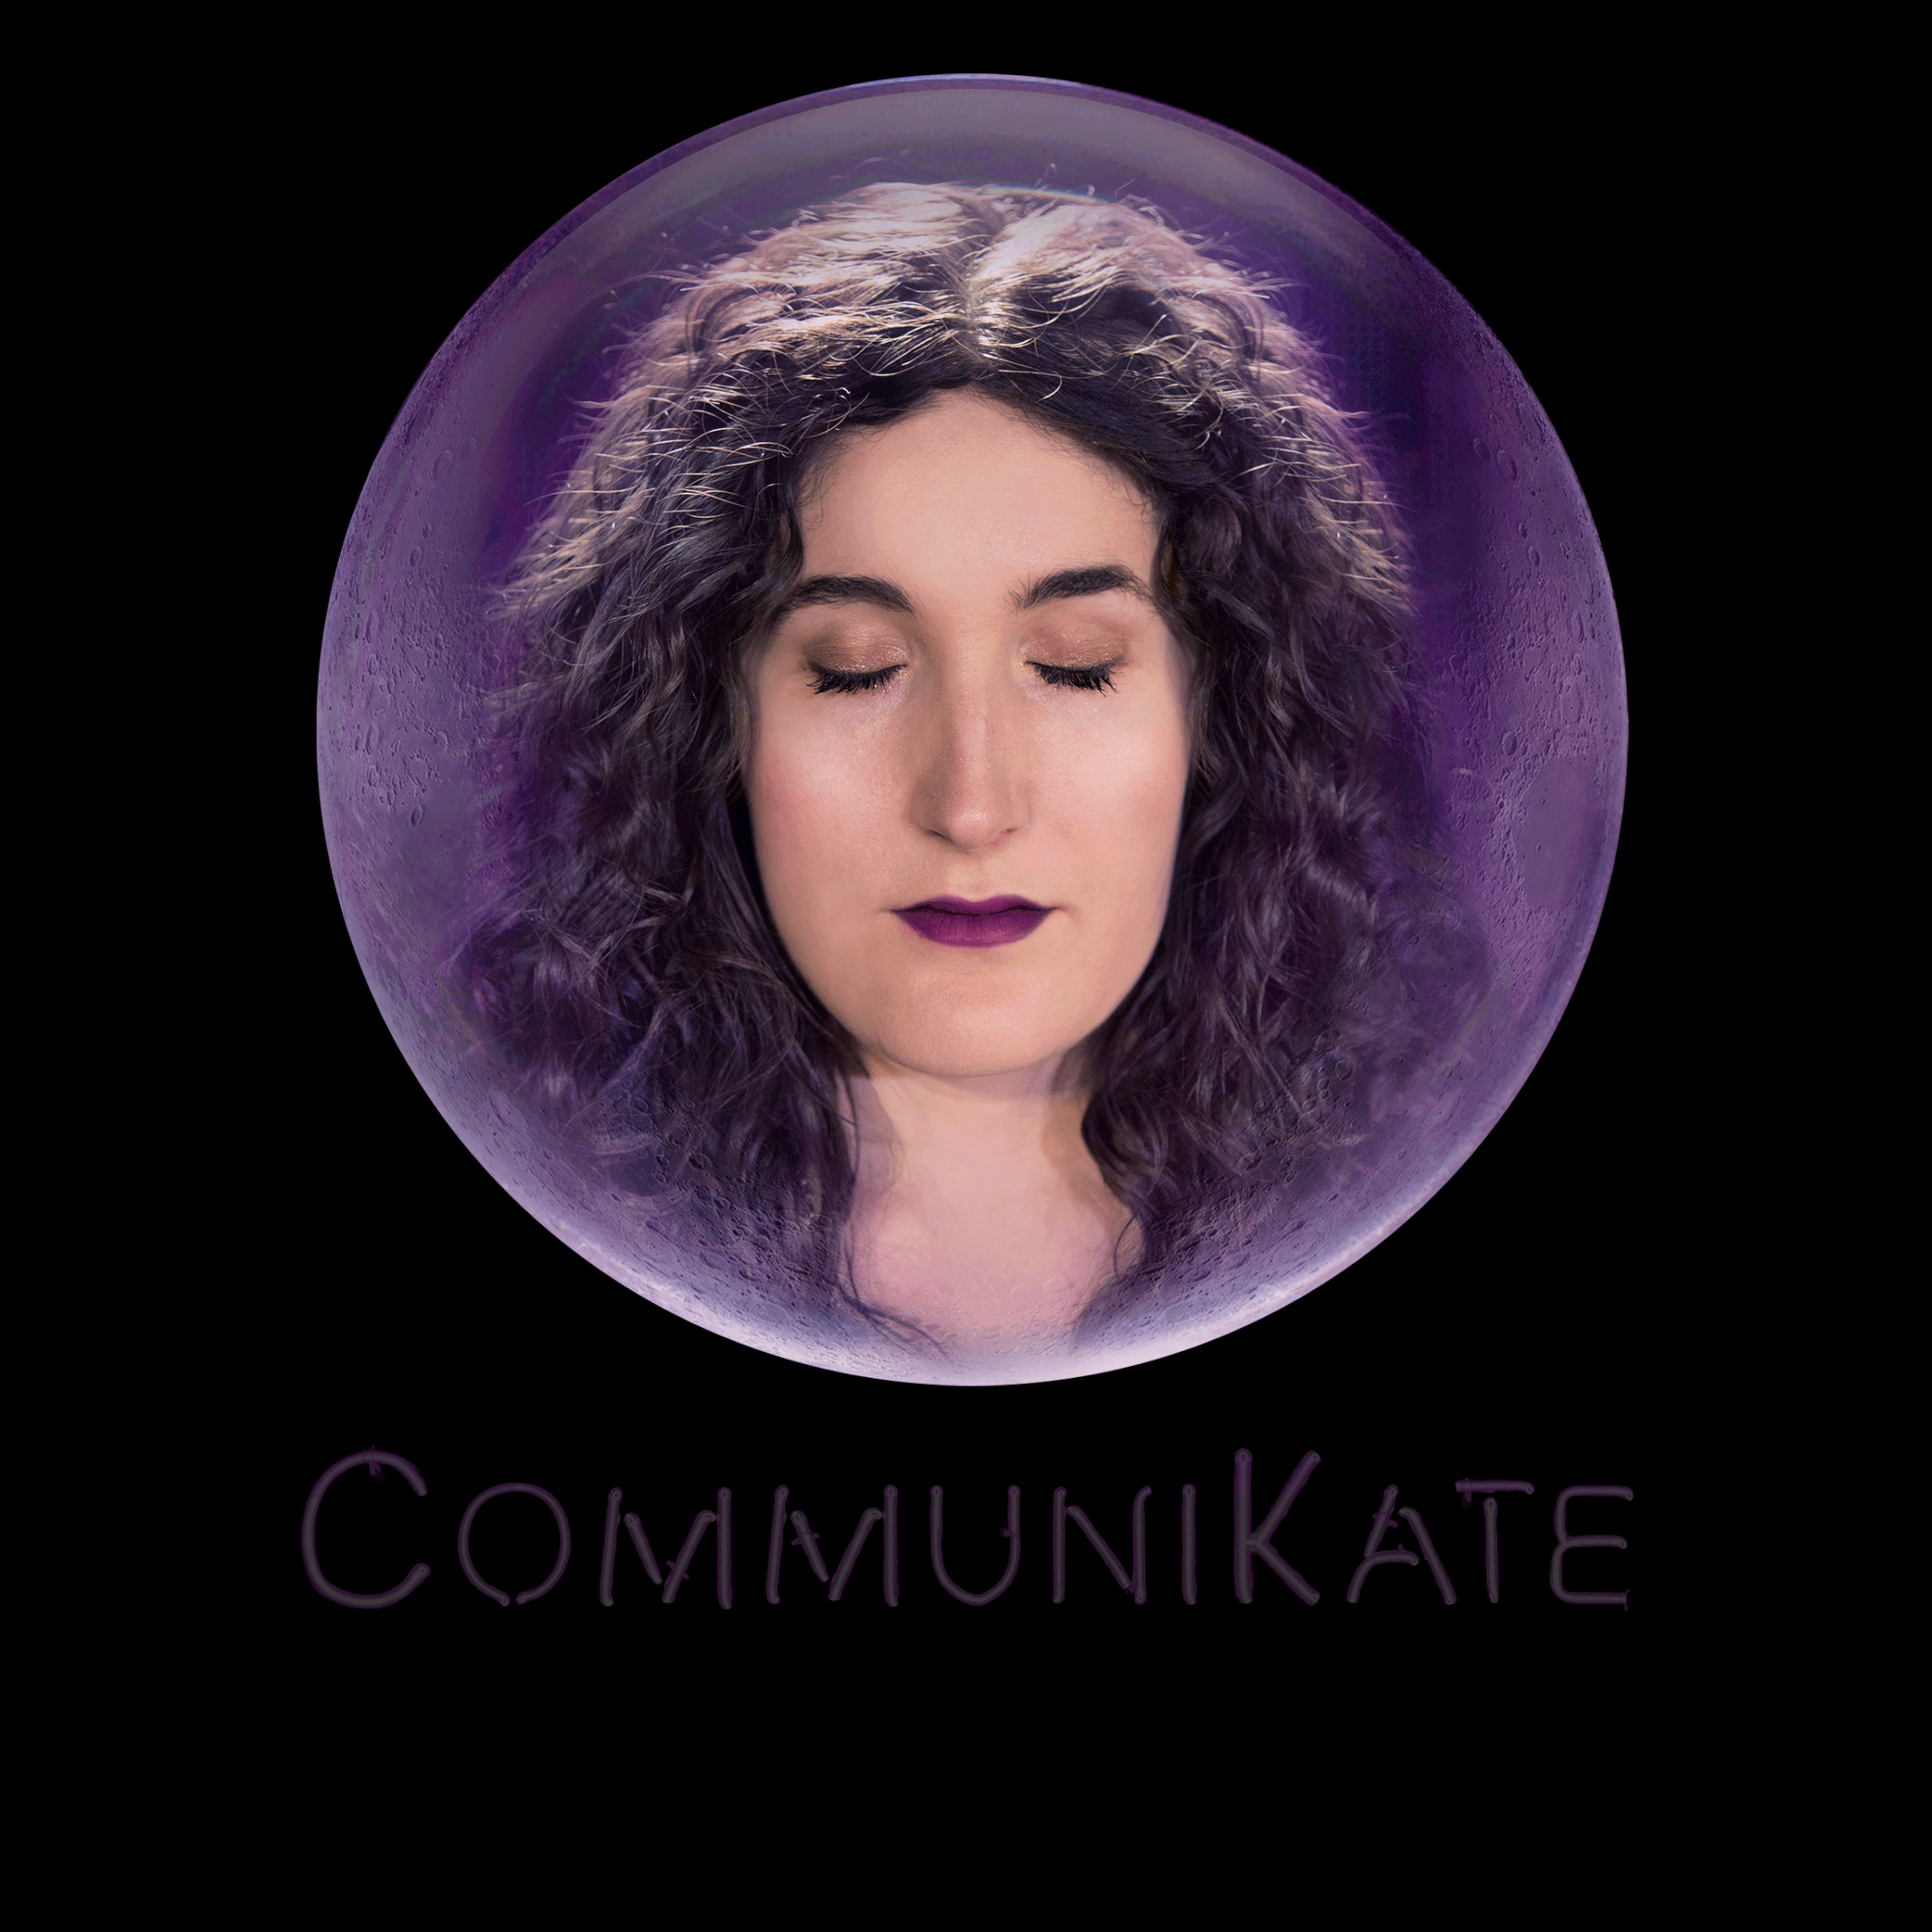 "CommuniKate" show poster